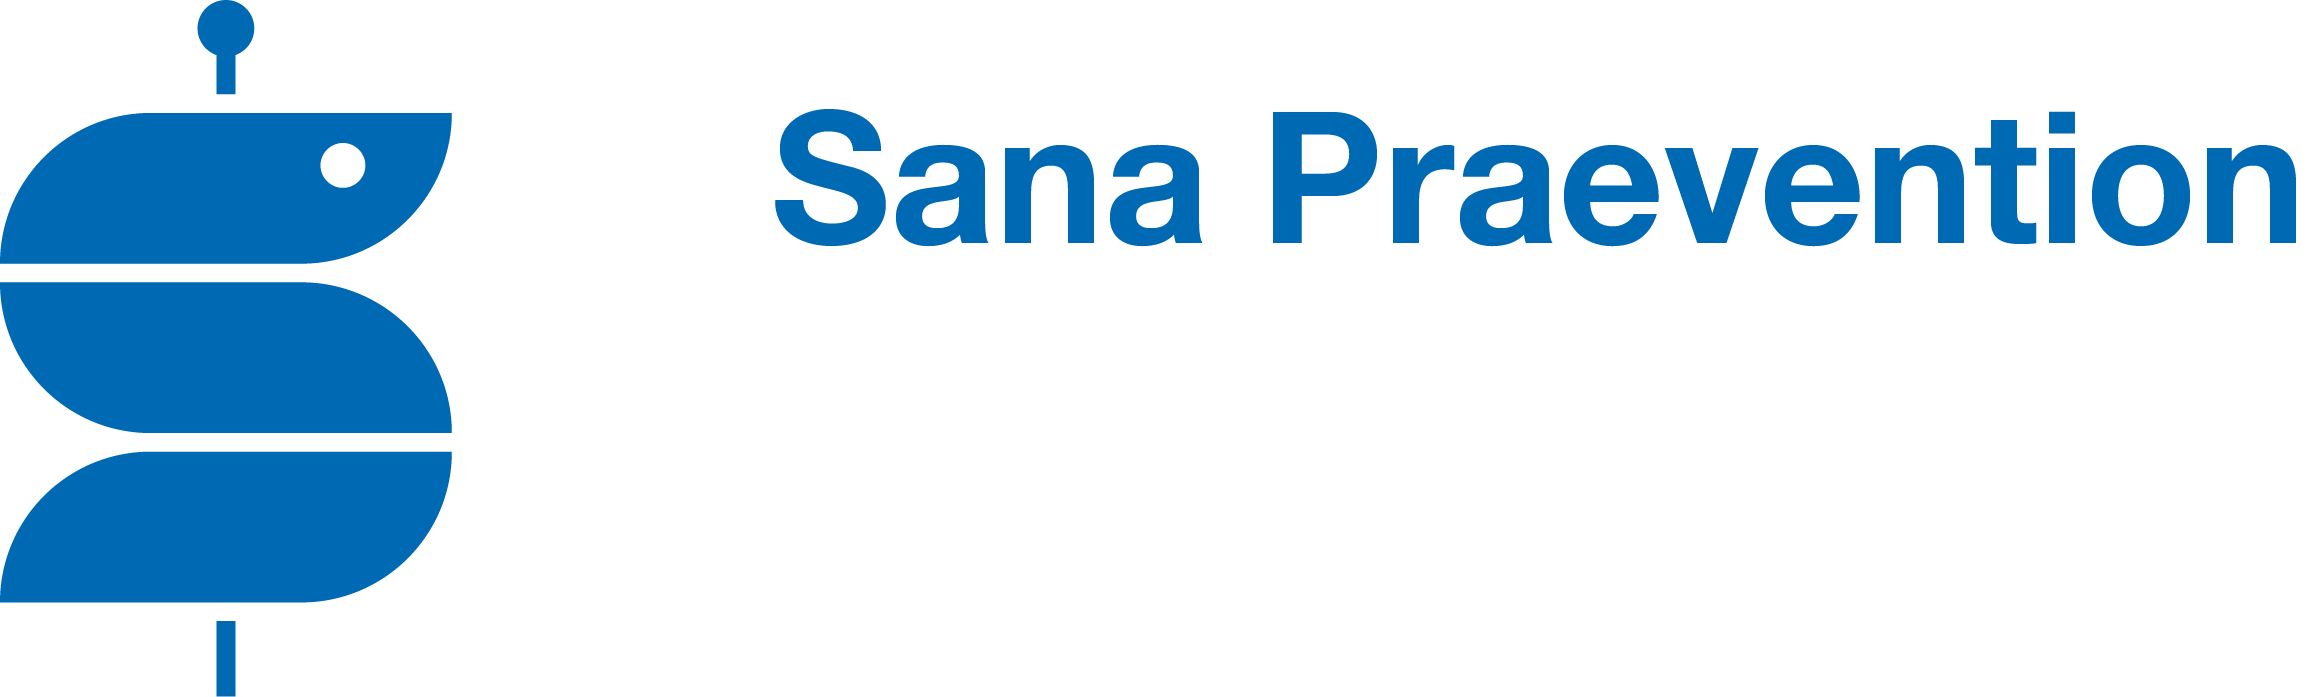 Sana Praevention Logo